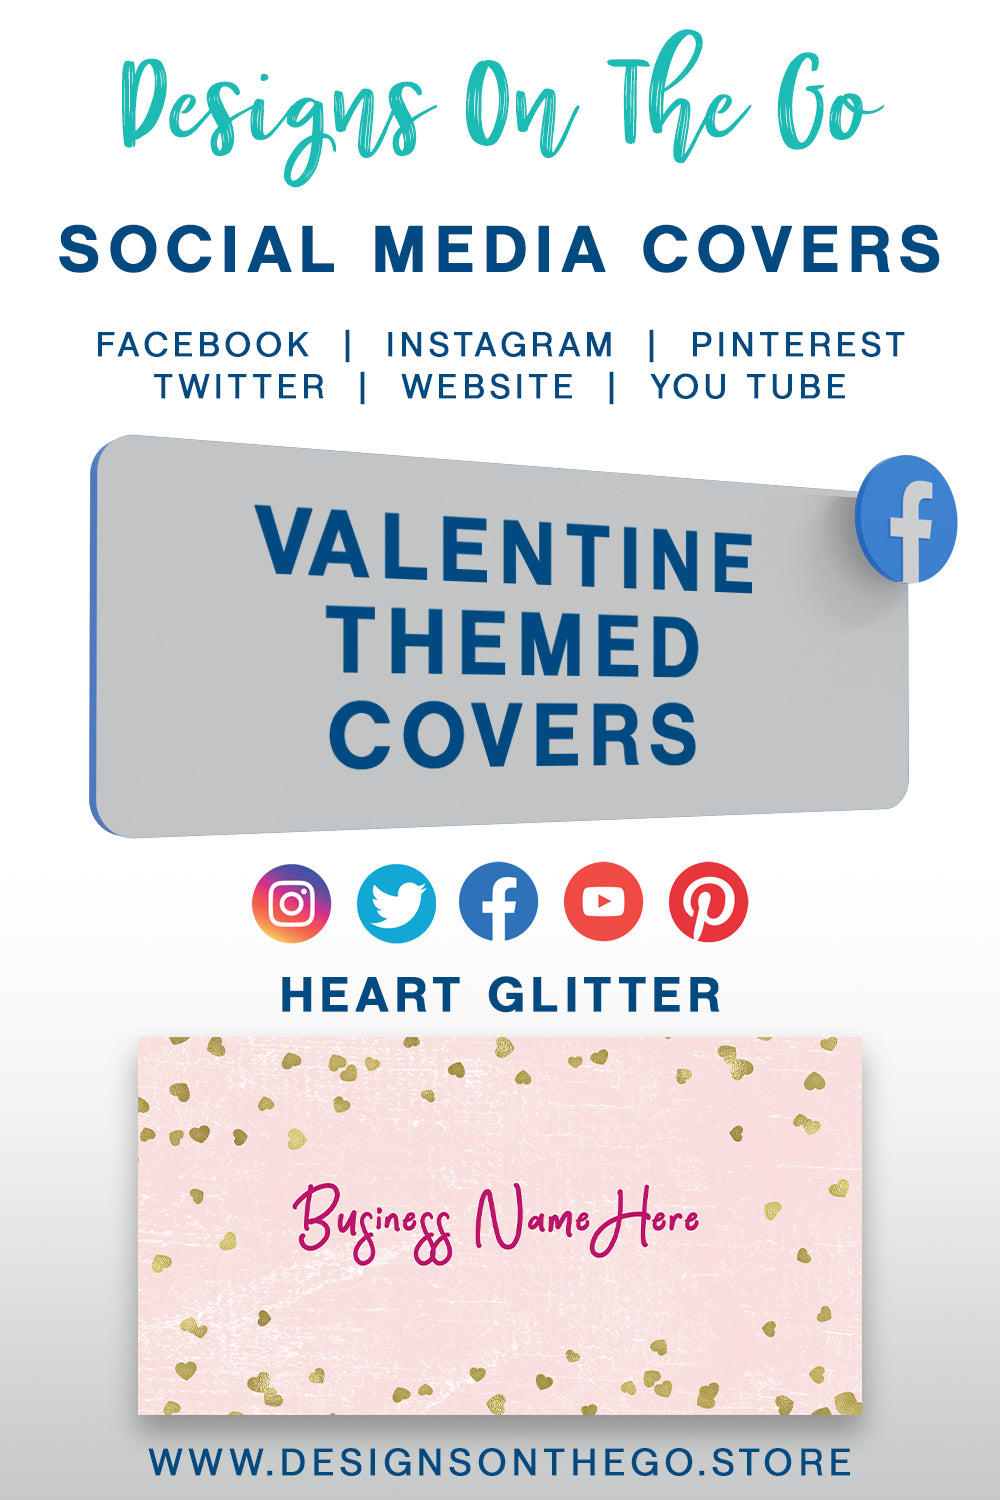 Valentine Themed Social Media Covers